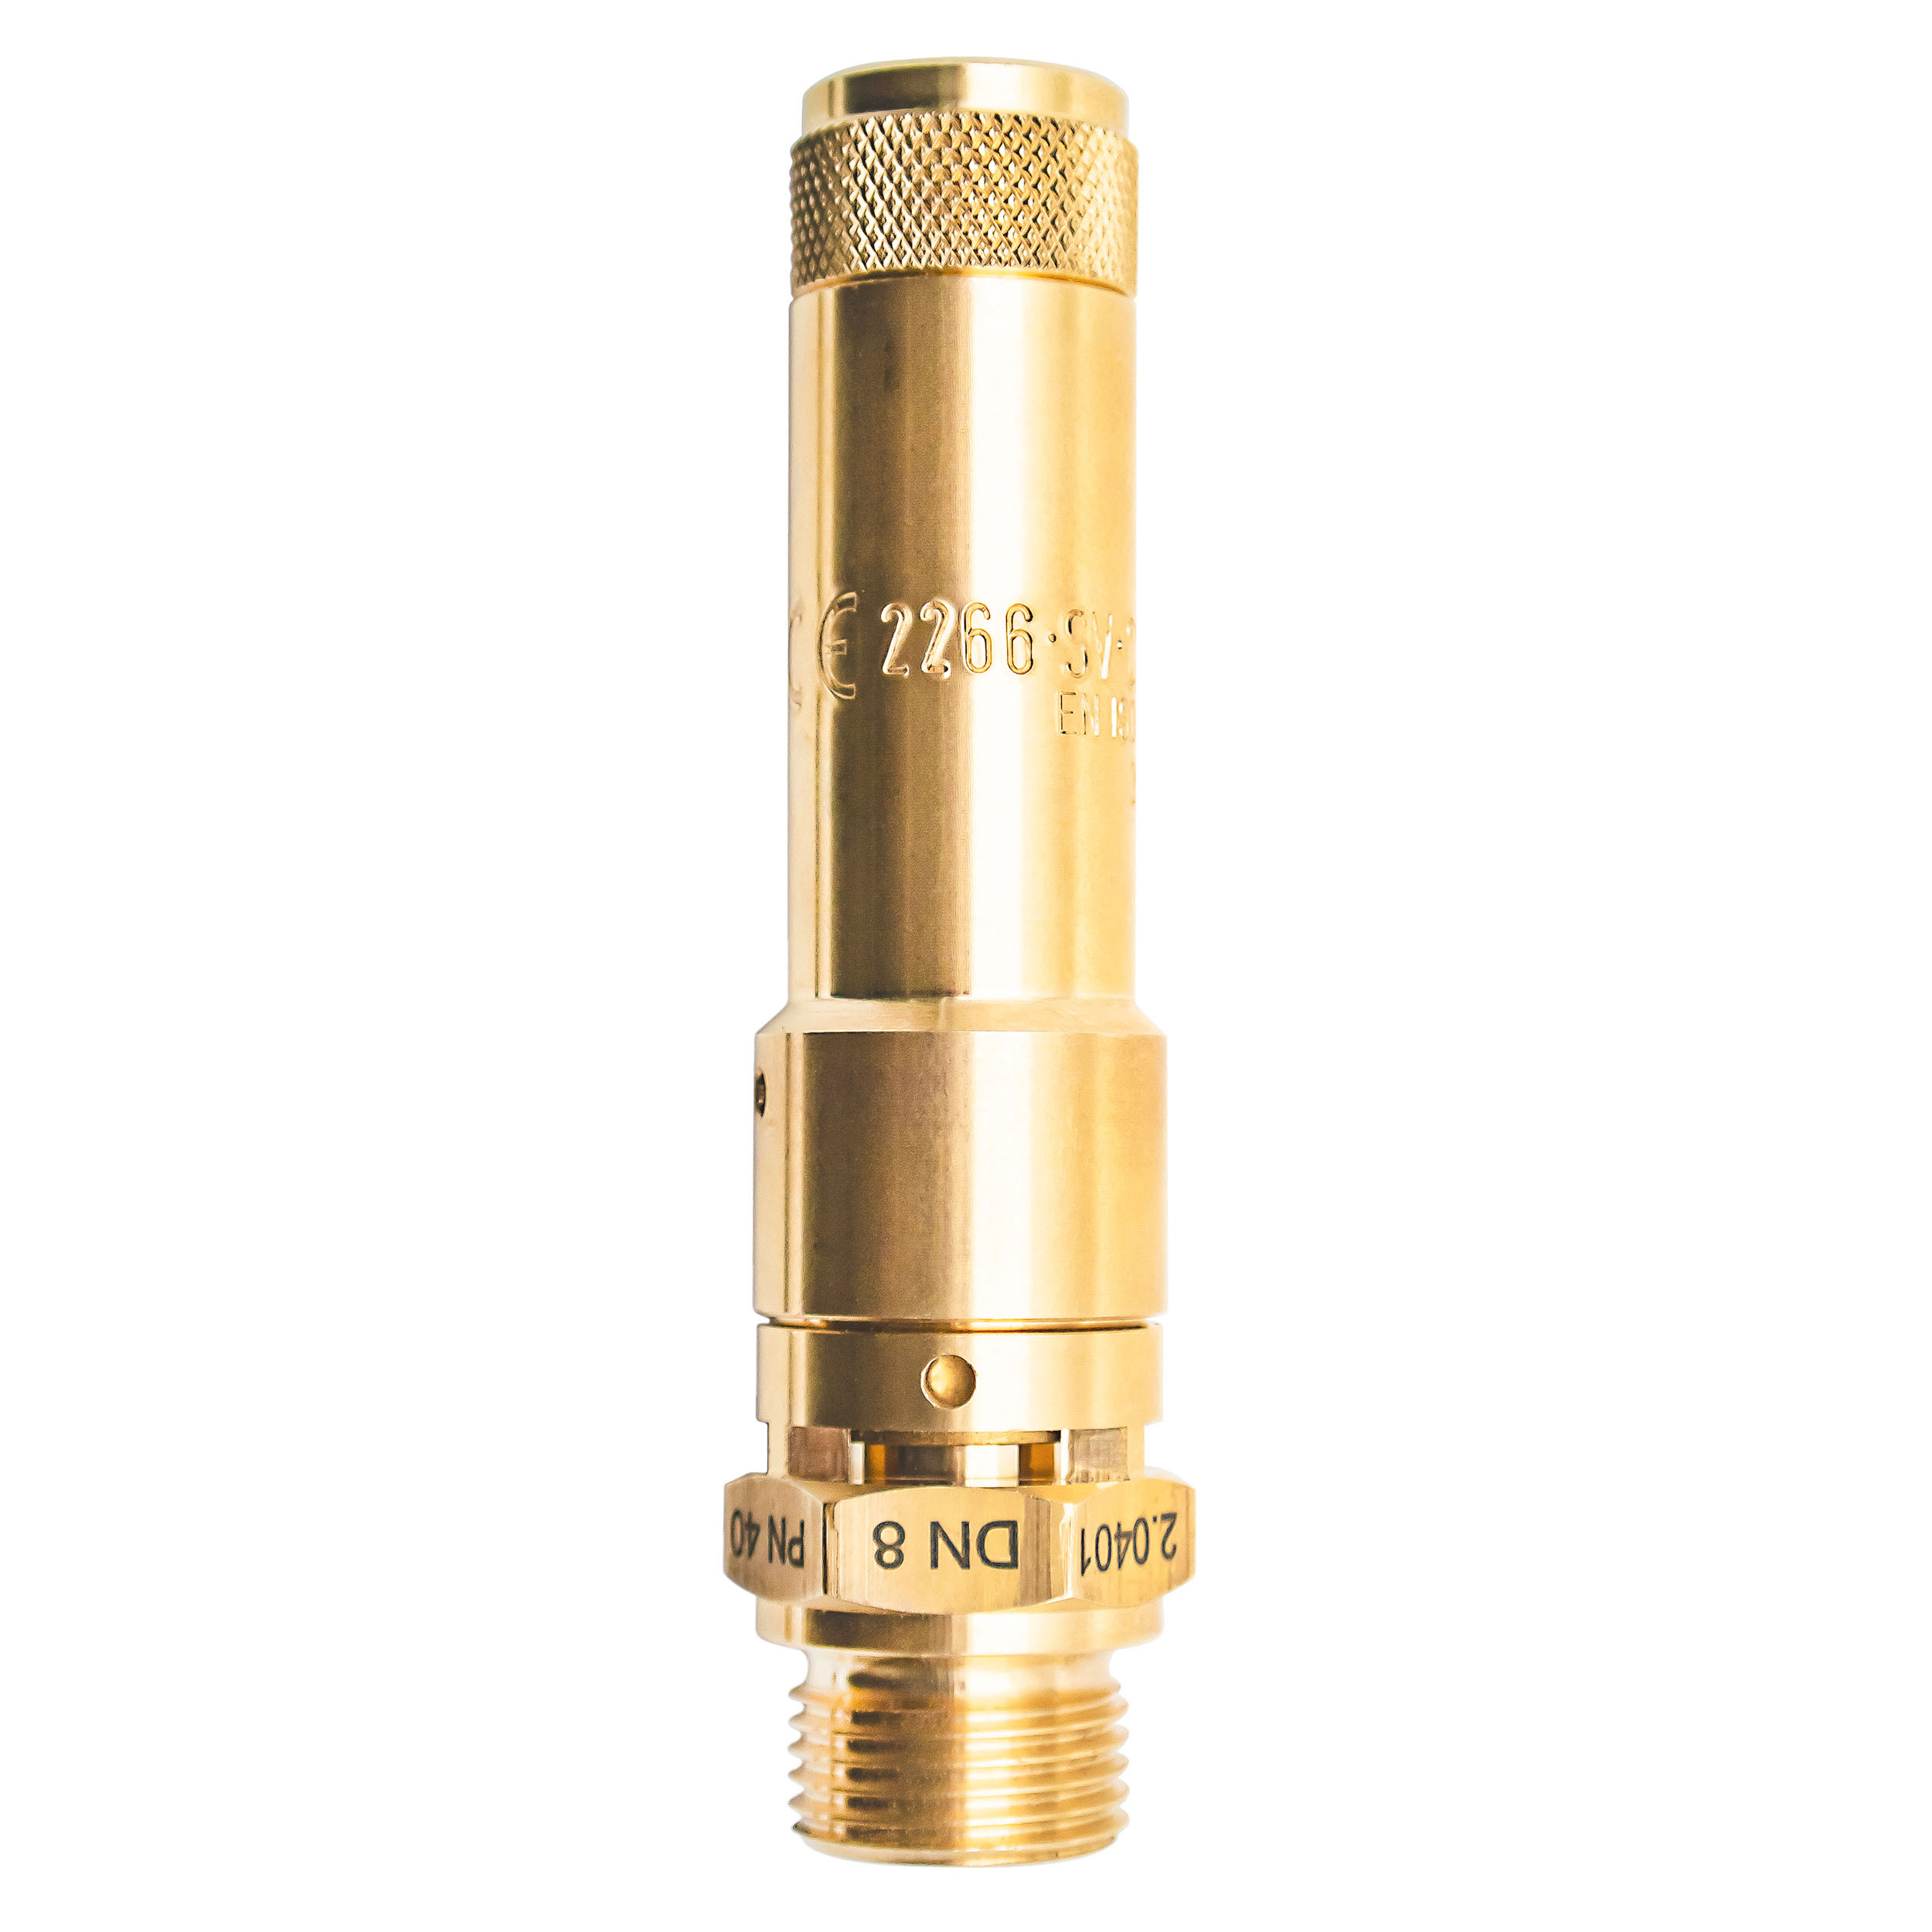 Savety valve component tested DN 8, G½, set pressure: 2.0 bar (29 psi)